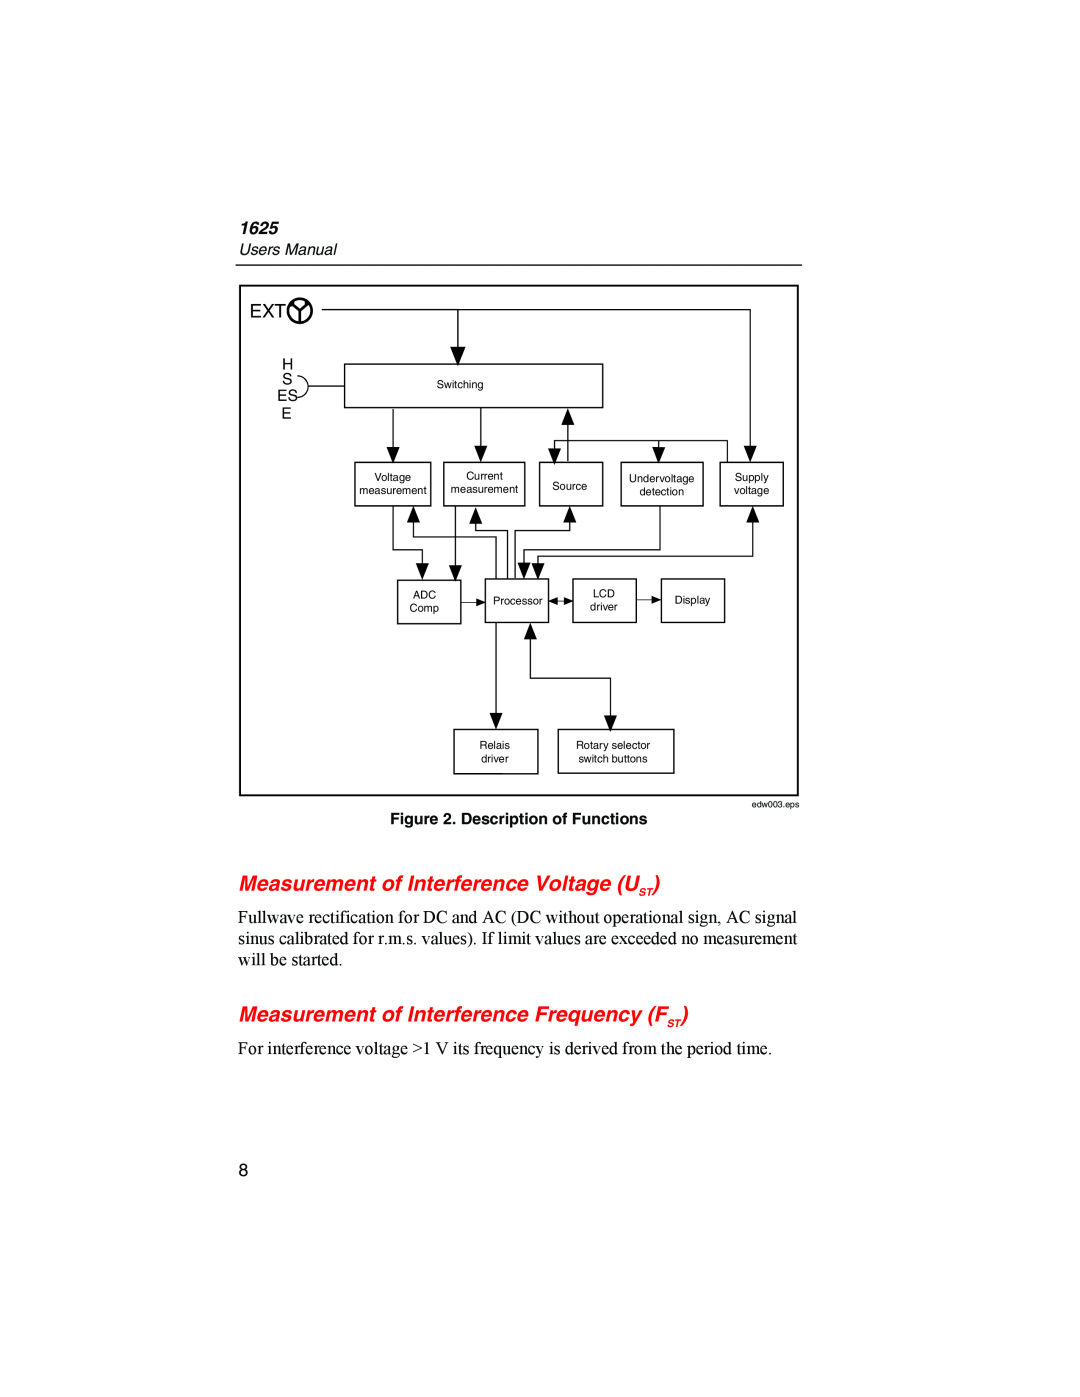 Fluke 1625 user manual Measurement of Interference Voltage UST, Measurement of Interference Frequency FST 